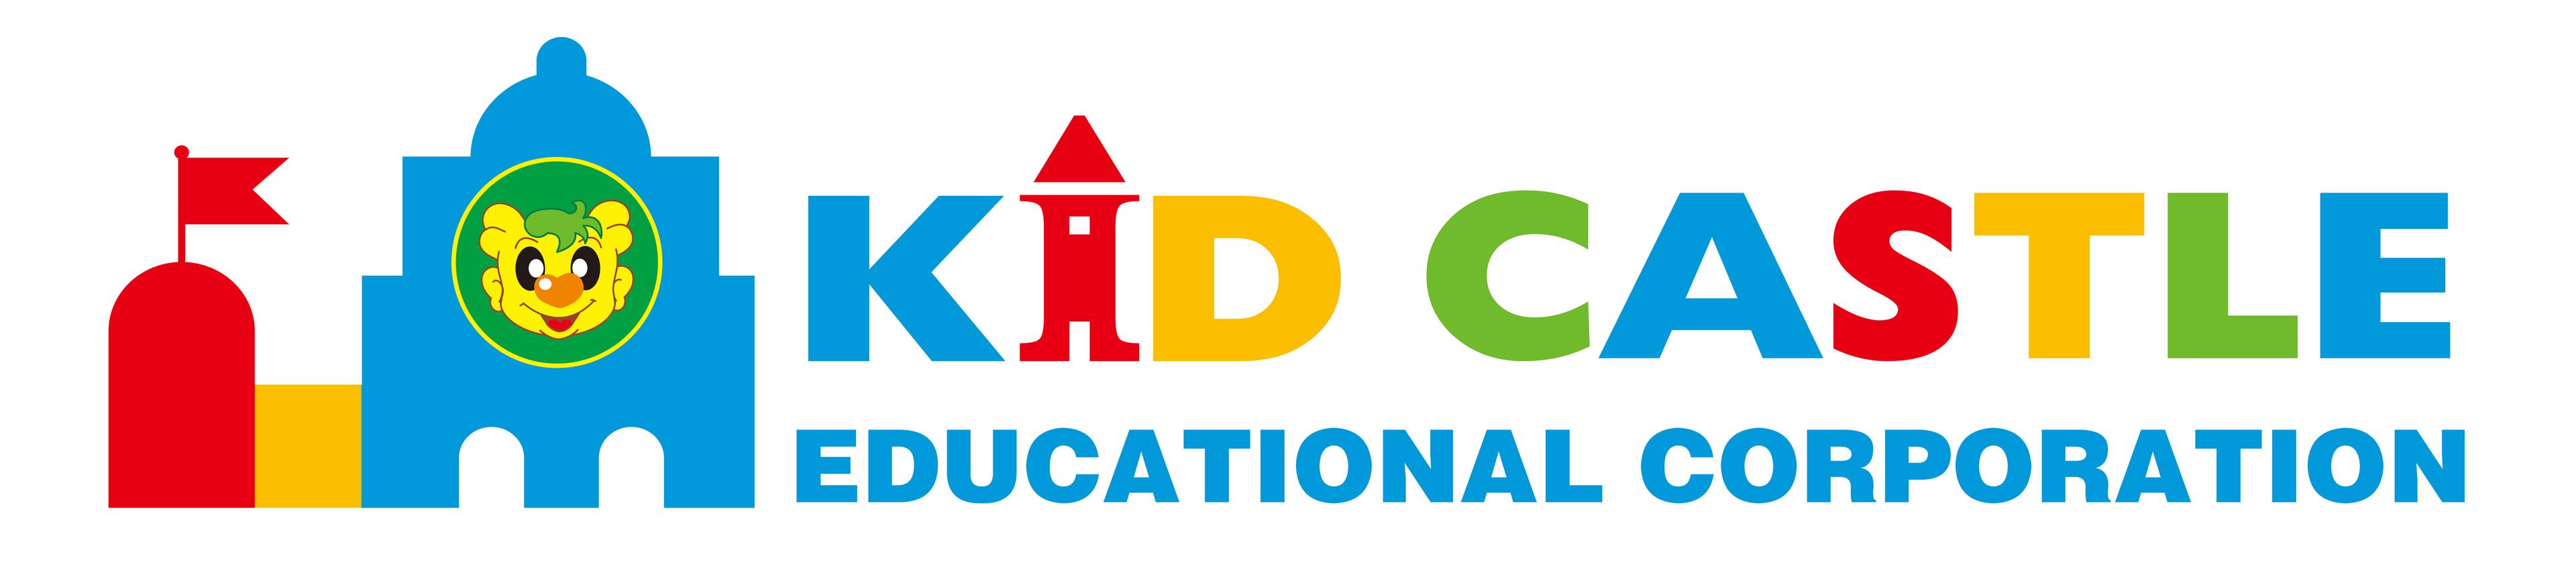 Kid Castle Educational Corporation image